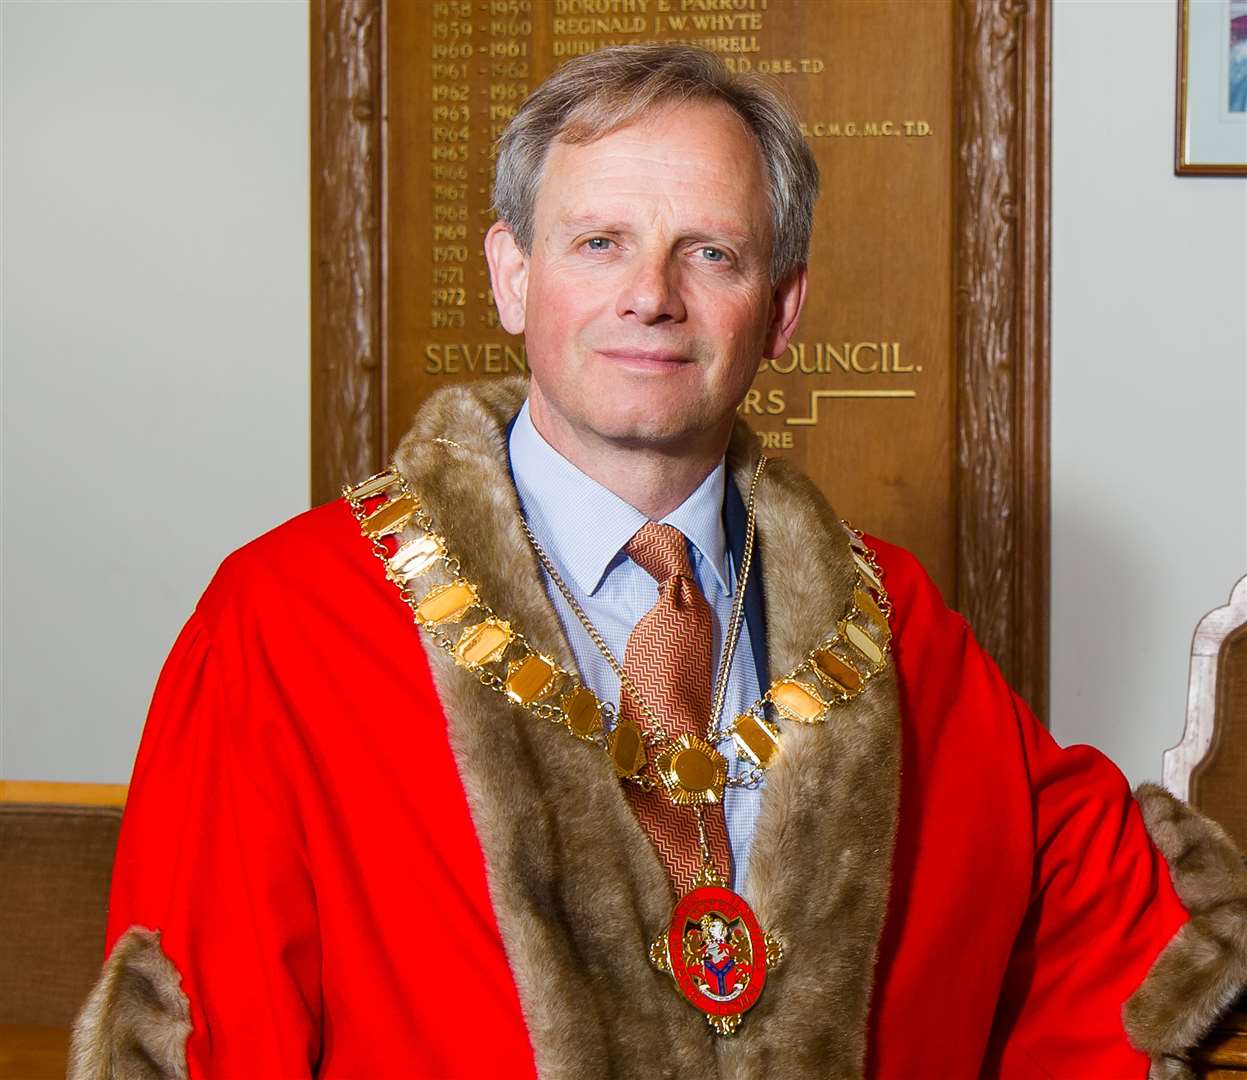 The Sevenoaks Town Council Mayor, Cllr Nicholas Busvine